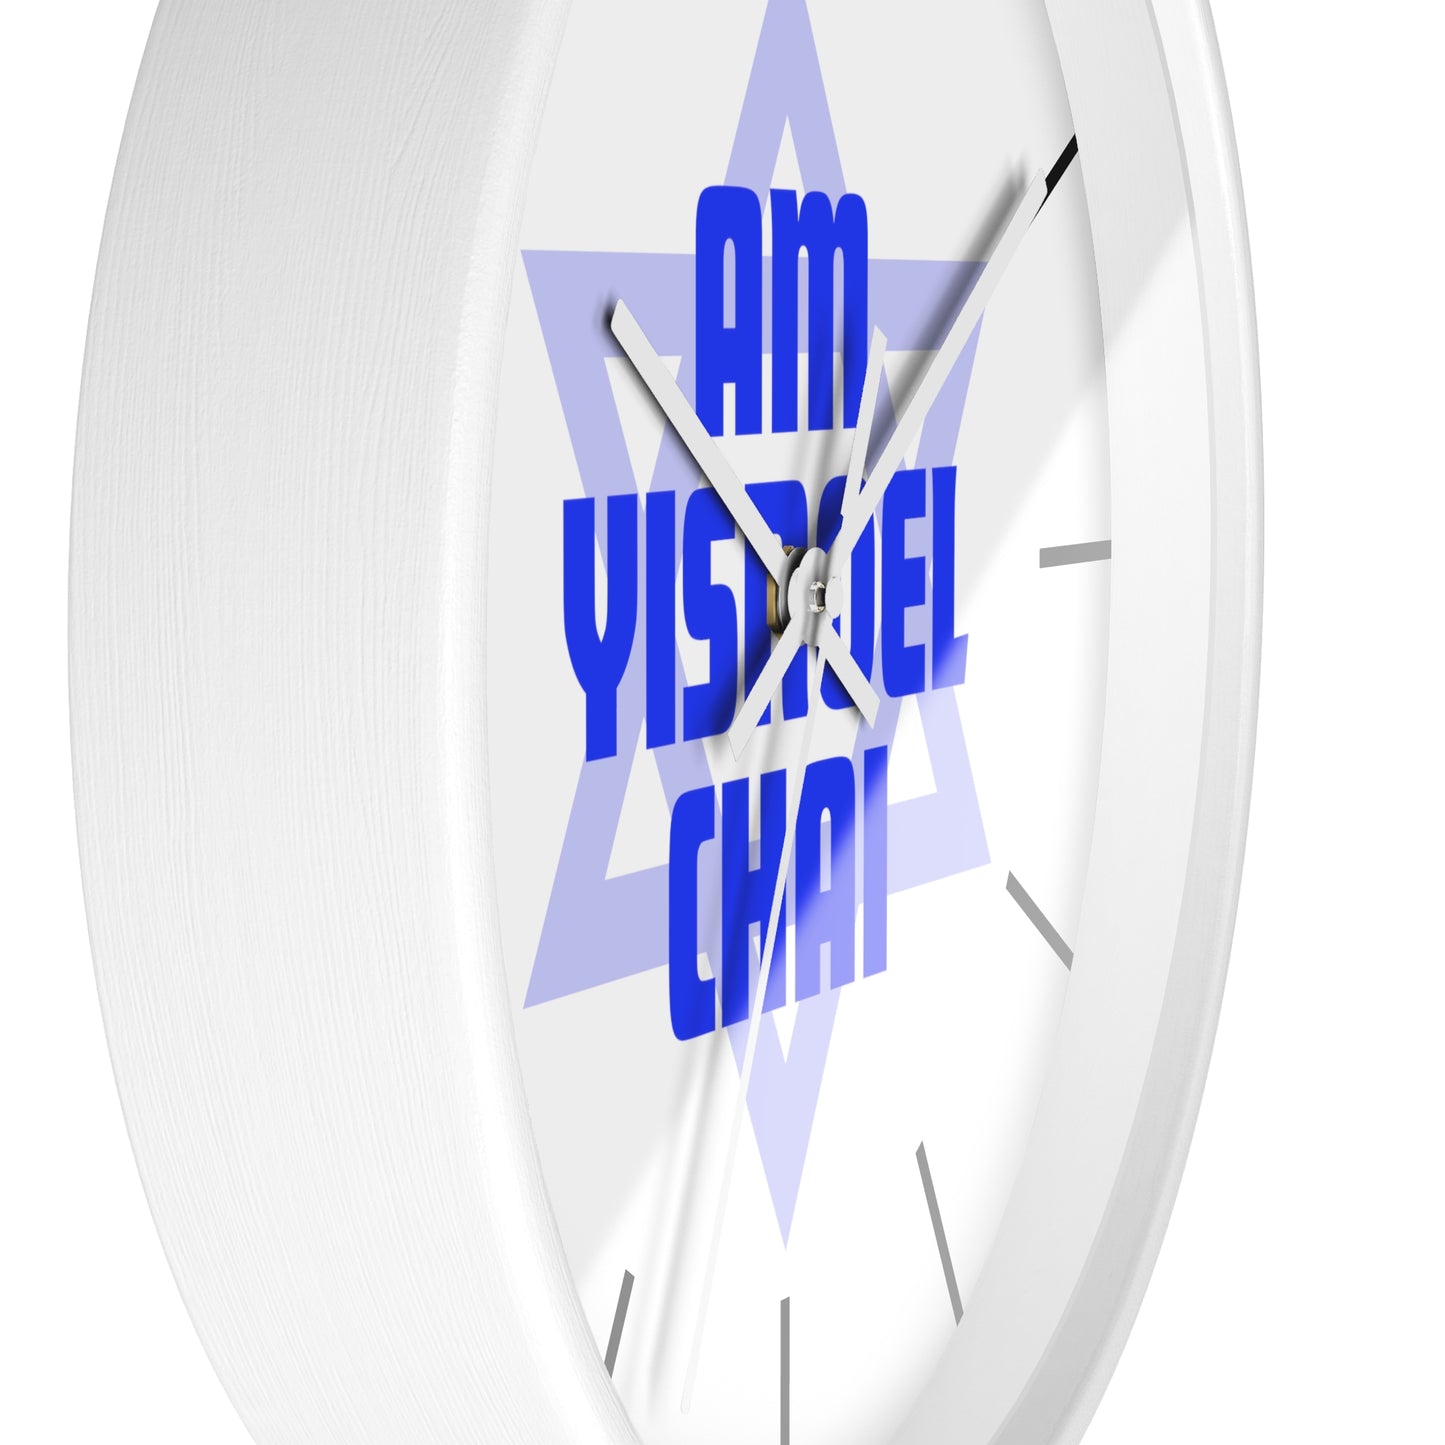 Am Yisroel Chai Clock